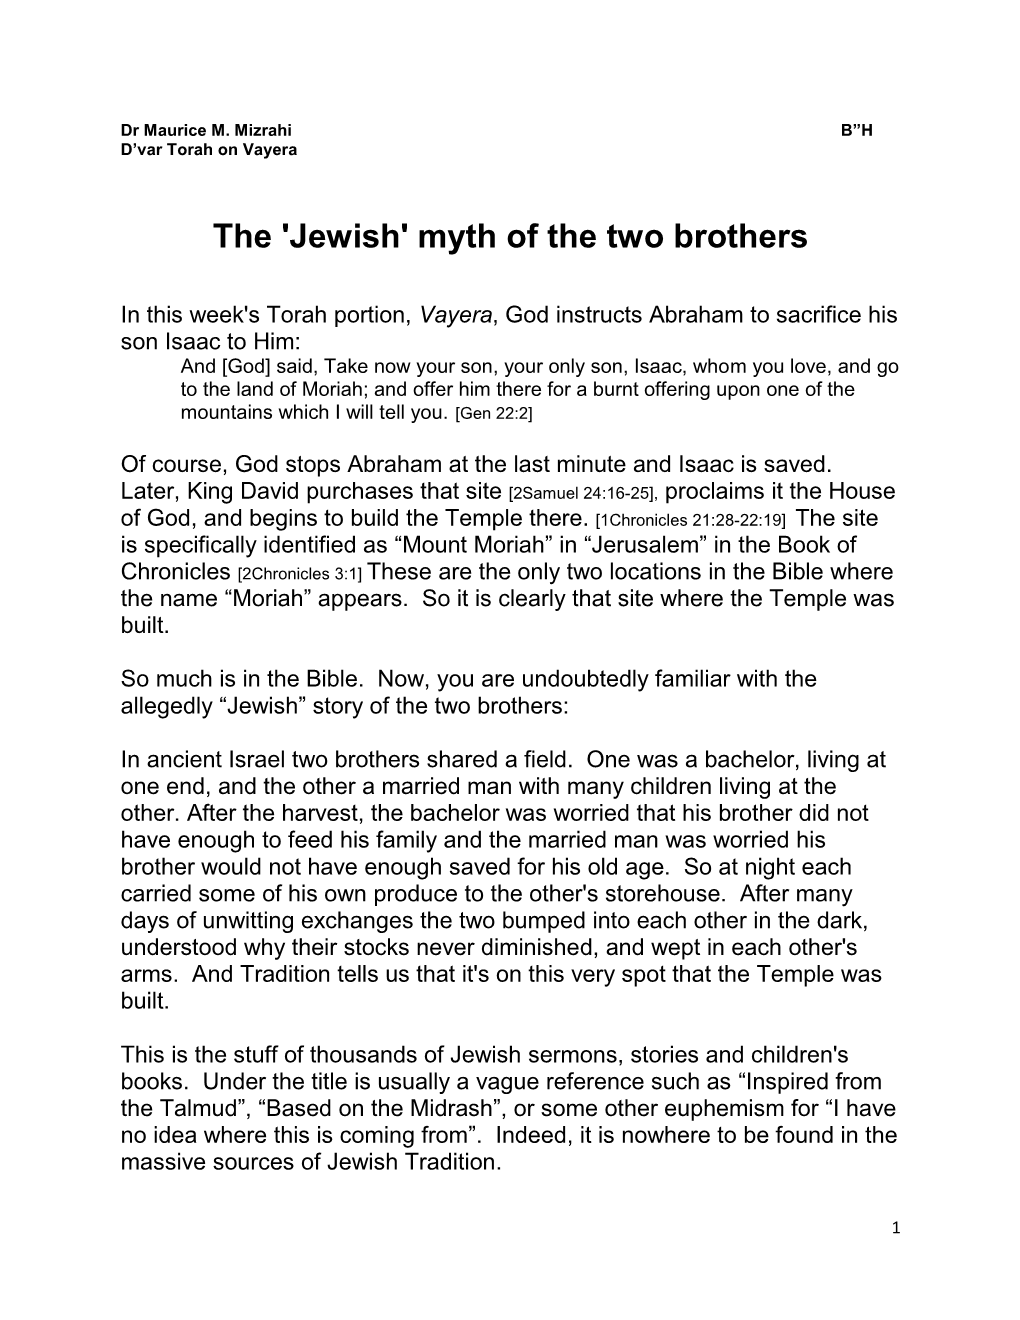 'Jewish' Myth of the Two Brothers (Vayera)